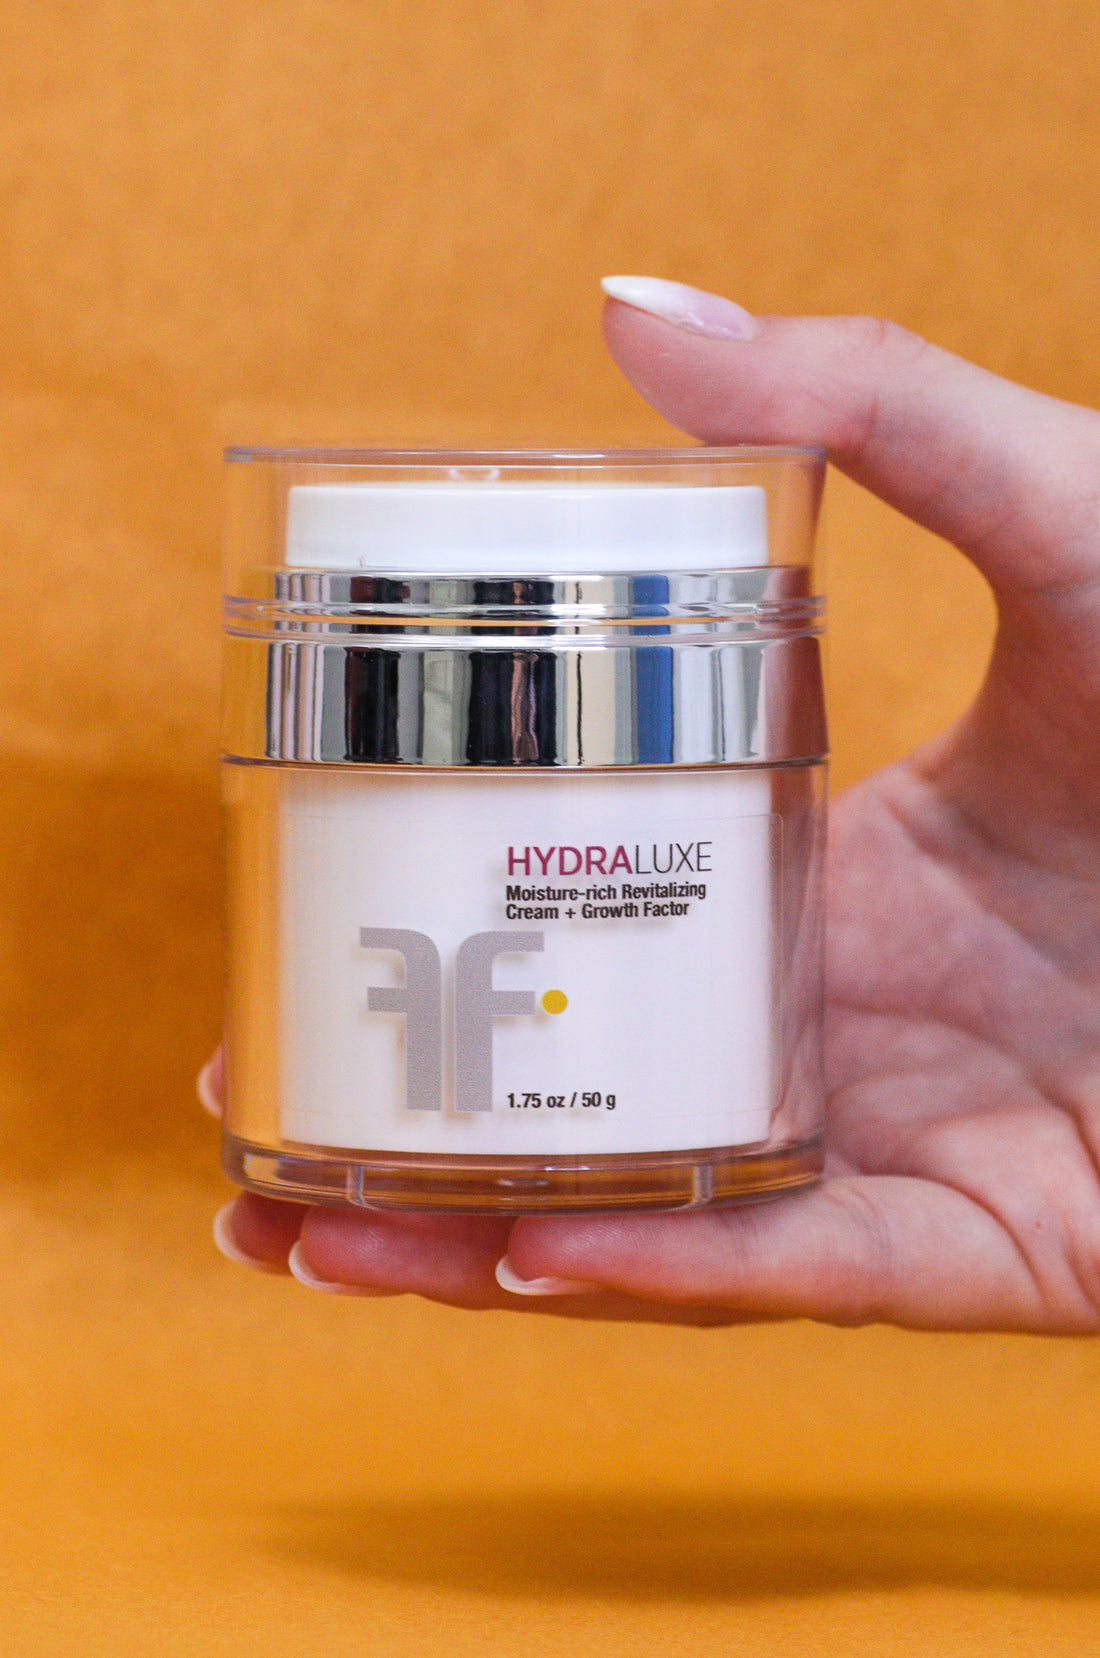 Hydraluxe moisture-rich revitalizing cream + growth factors